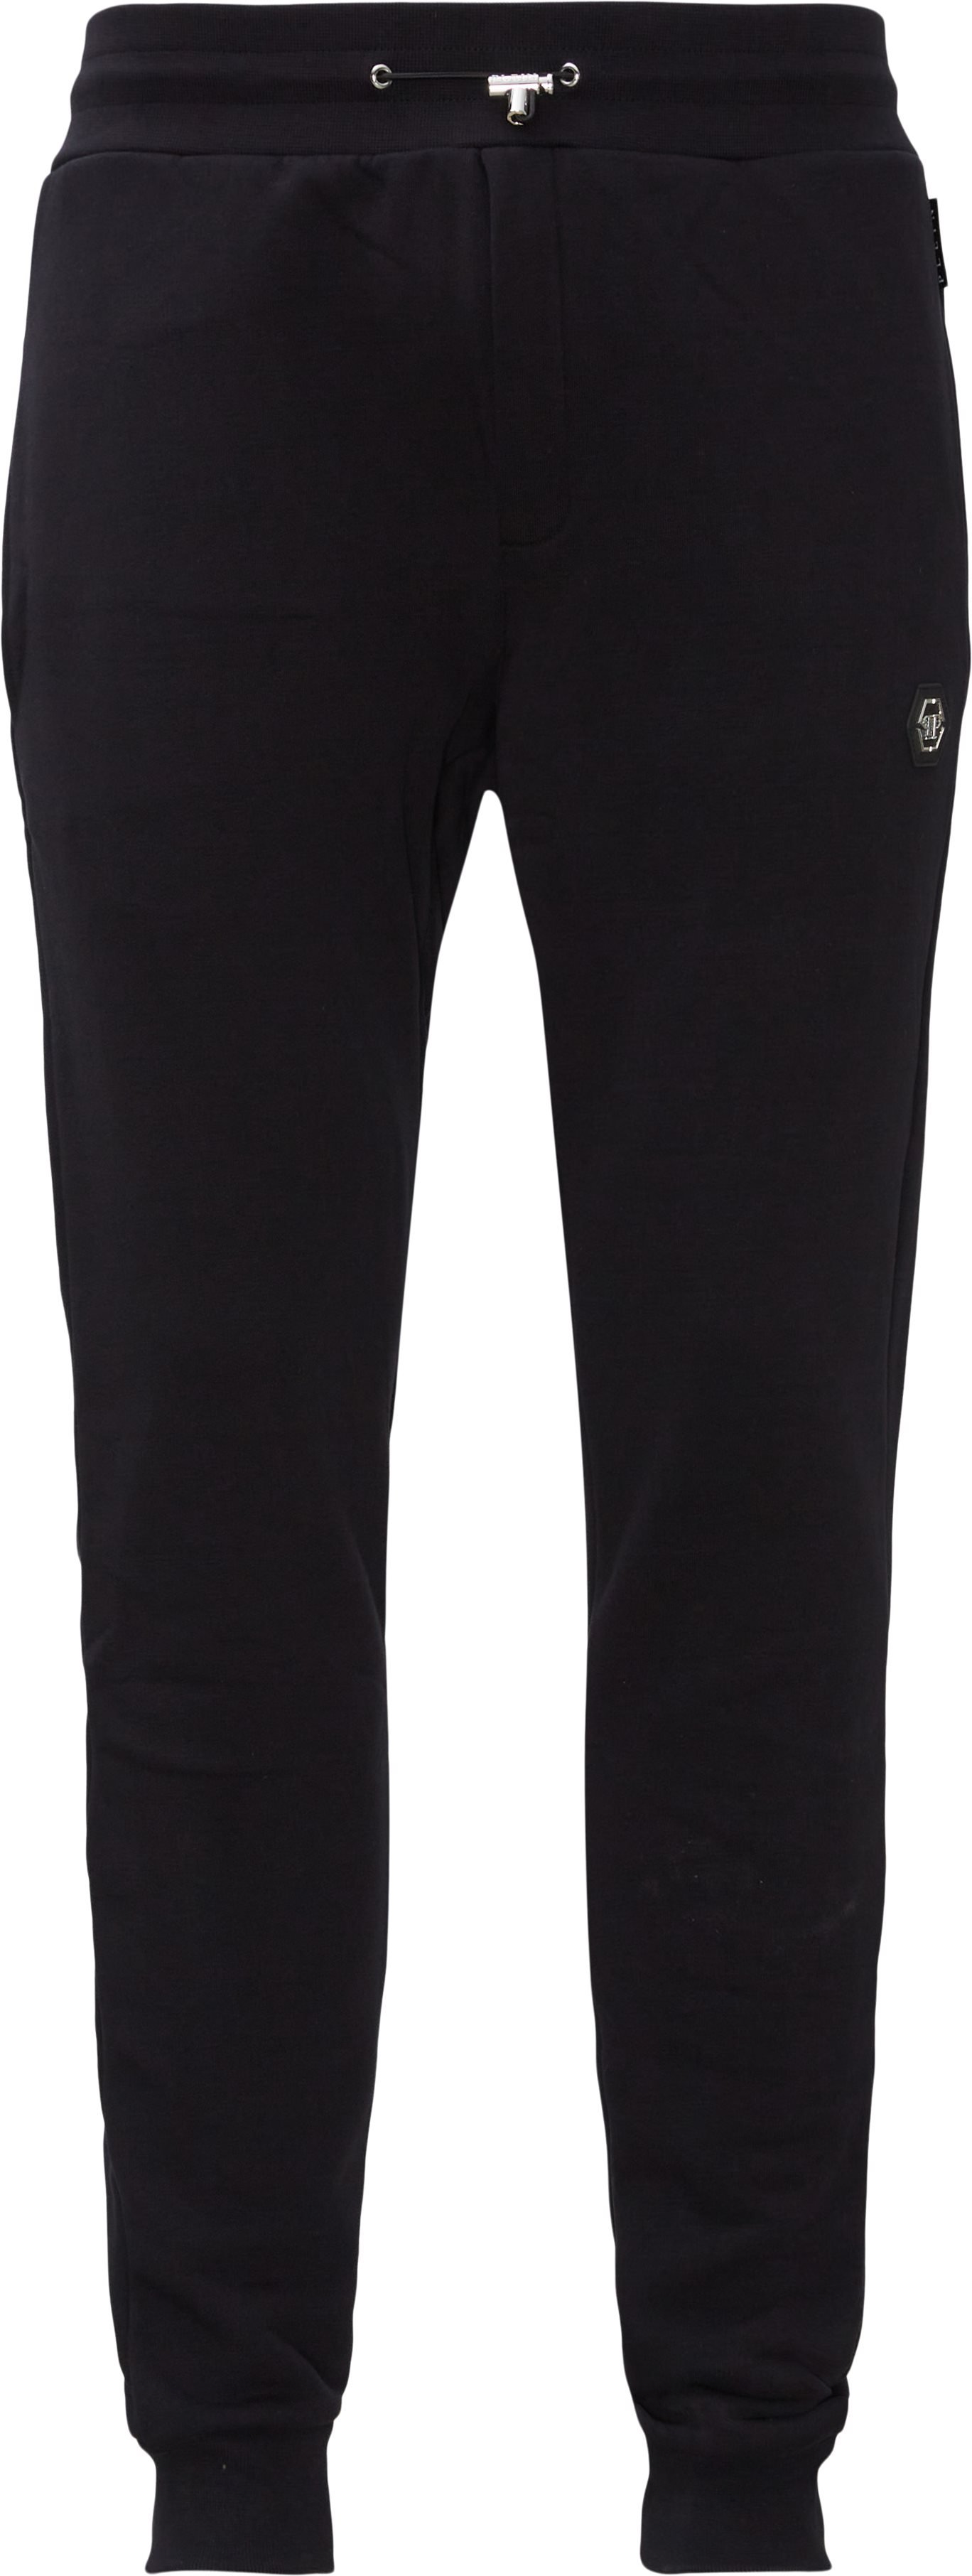 MJT1964 Iconic Jogging Trousers - Trousers - Regular fit - Black